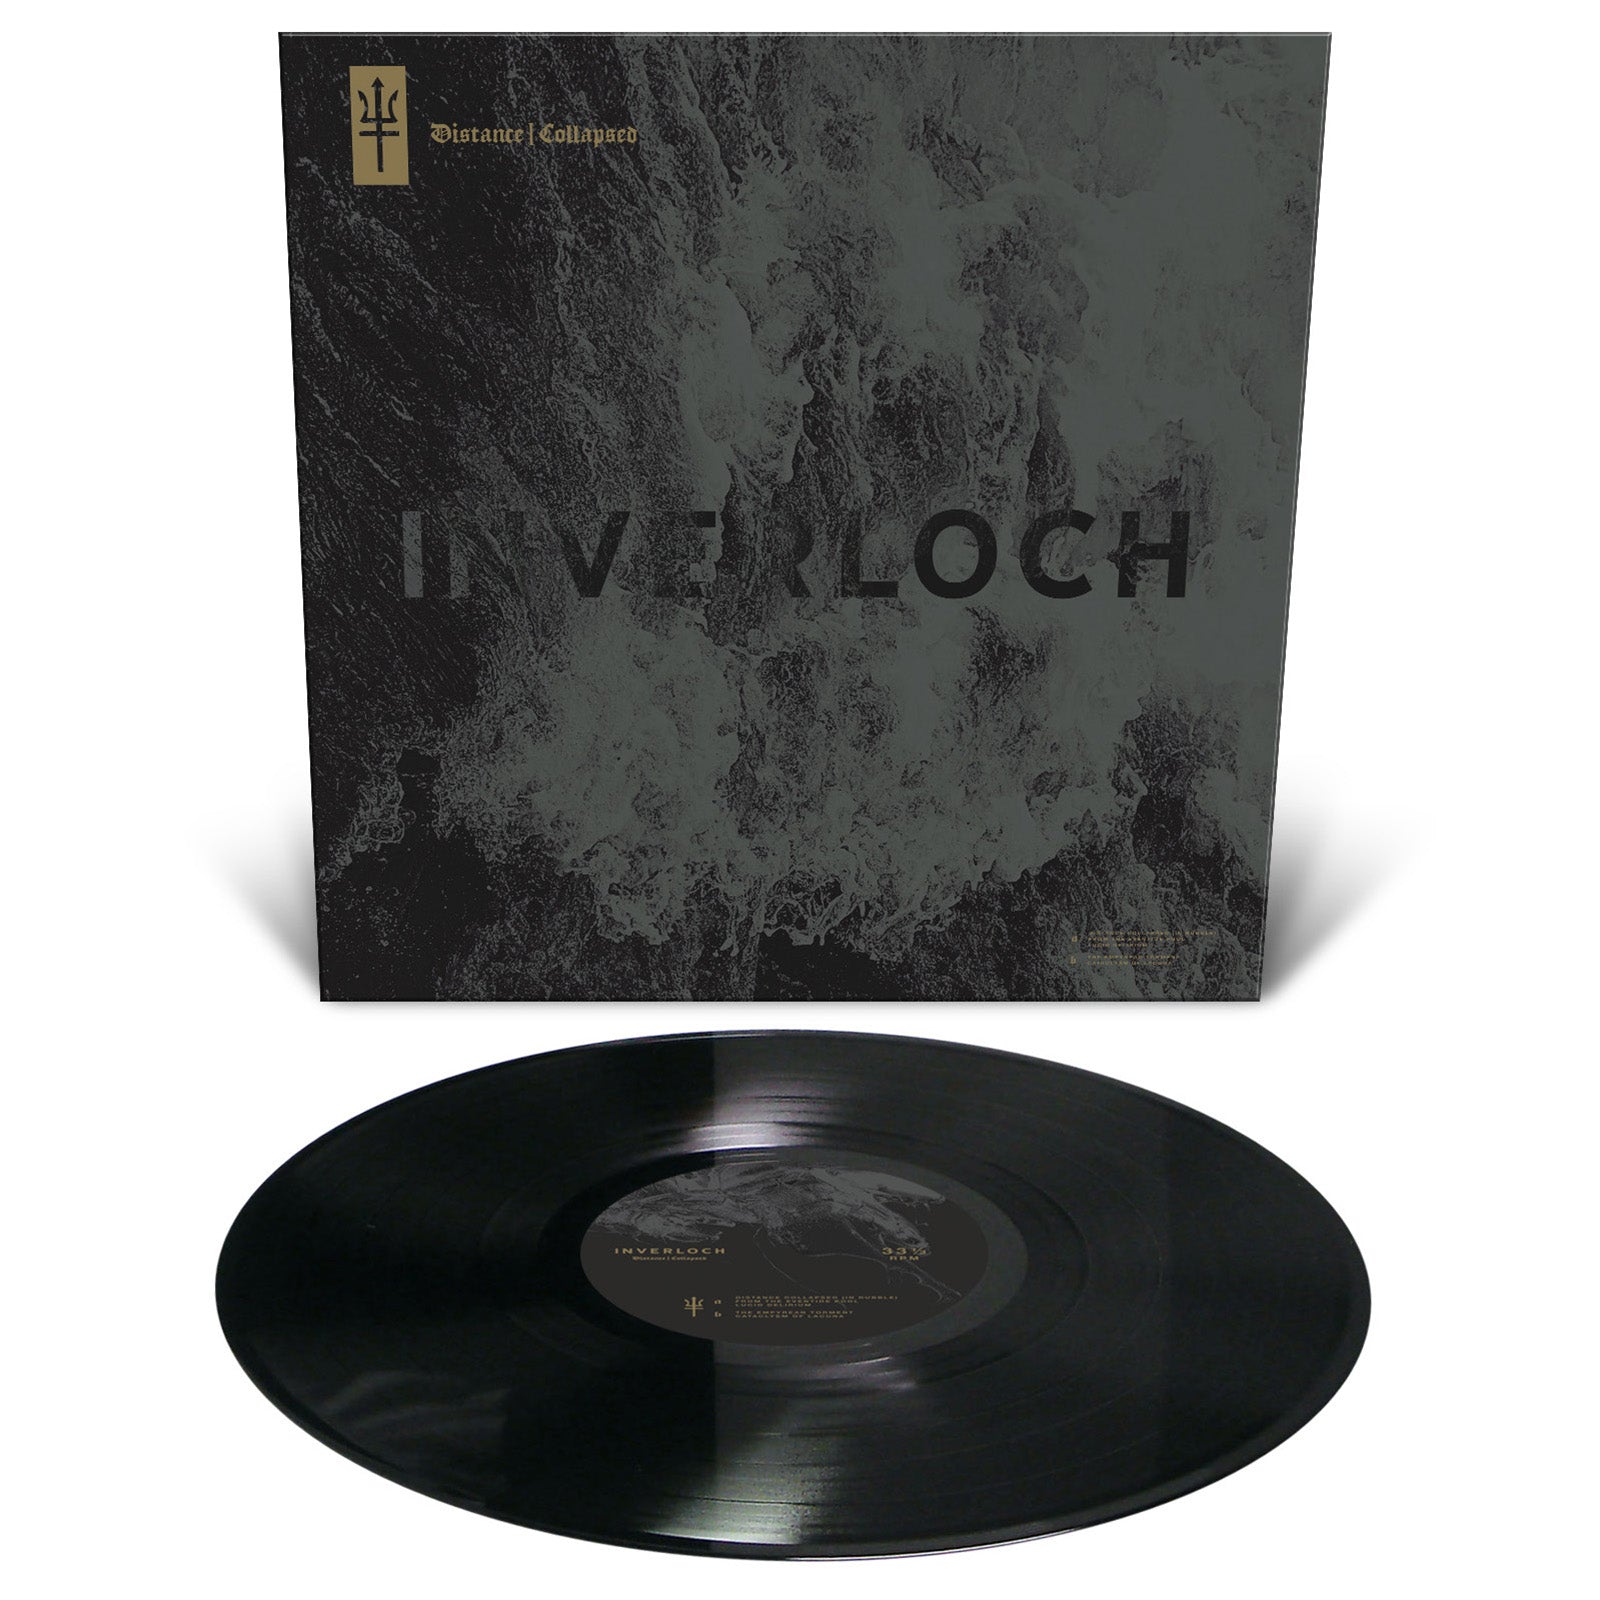 Inverloch "Distance | Collapsed" 12"